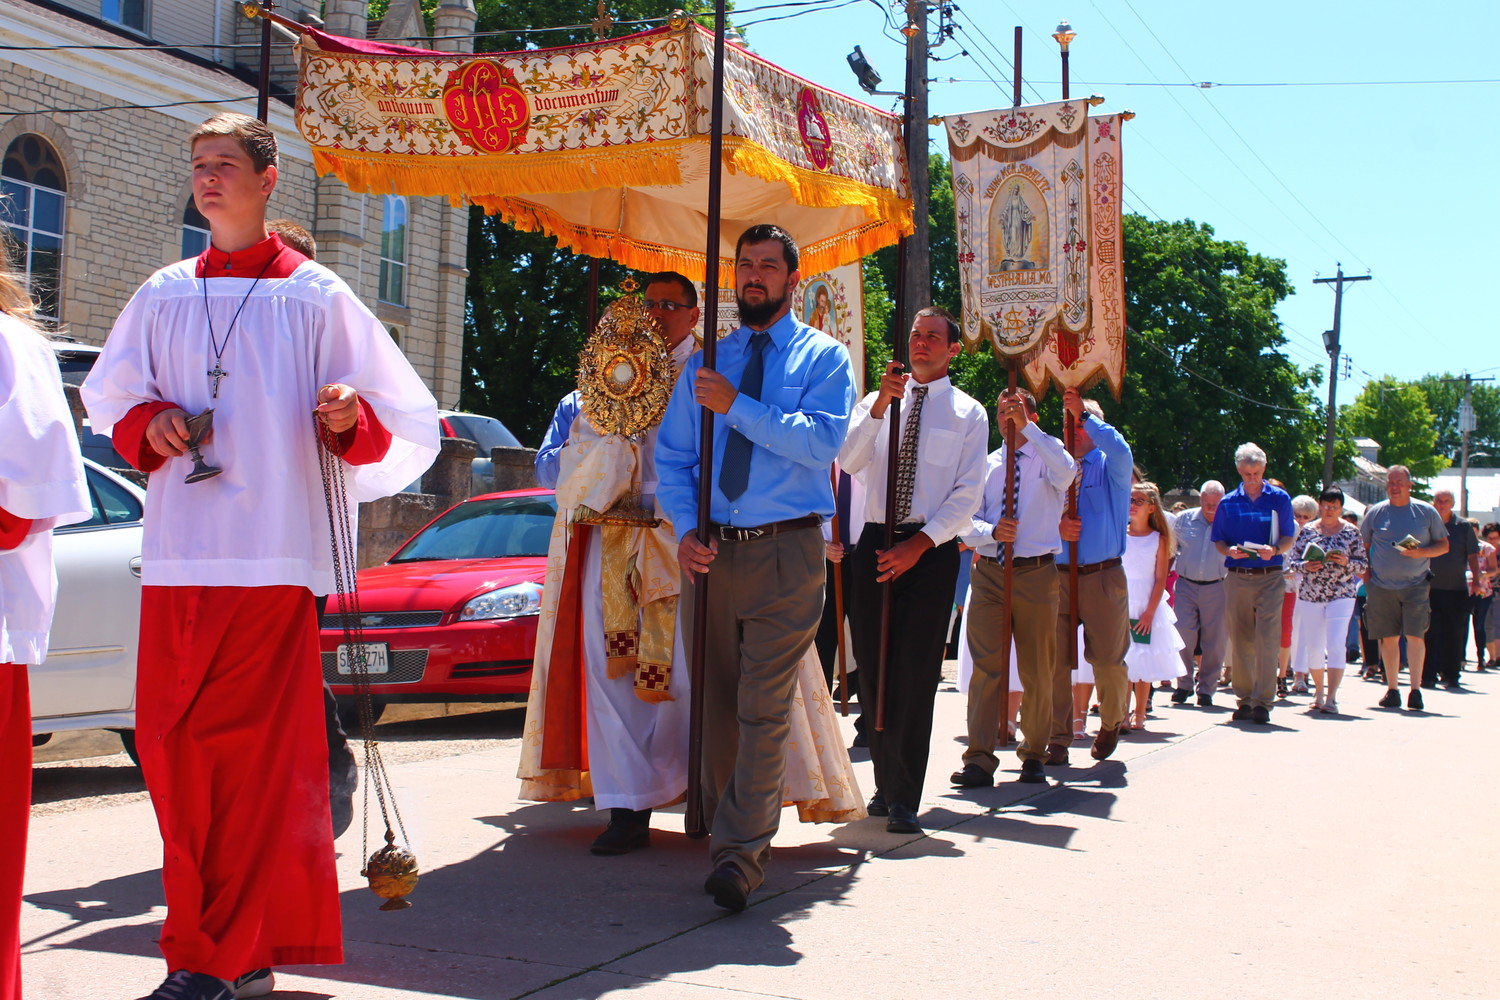 Westphalia “Corpus Christi” procession | The Catholic Missourian